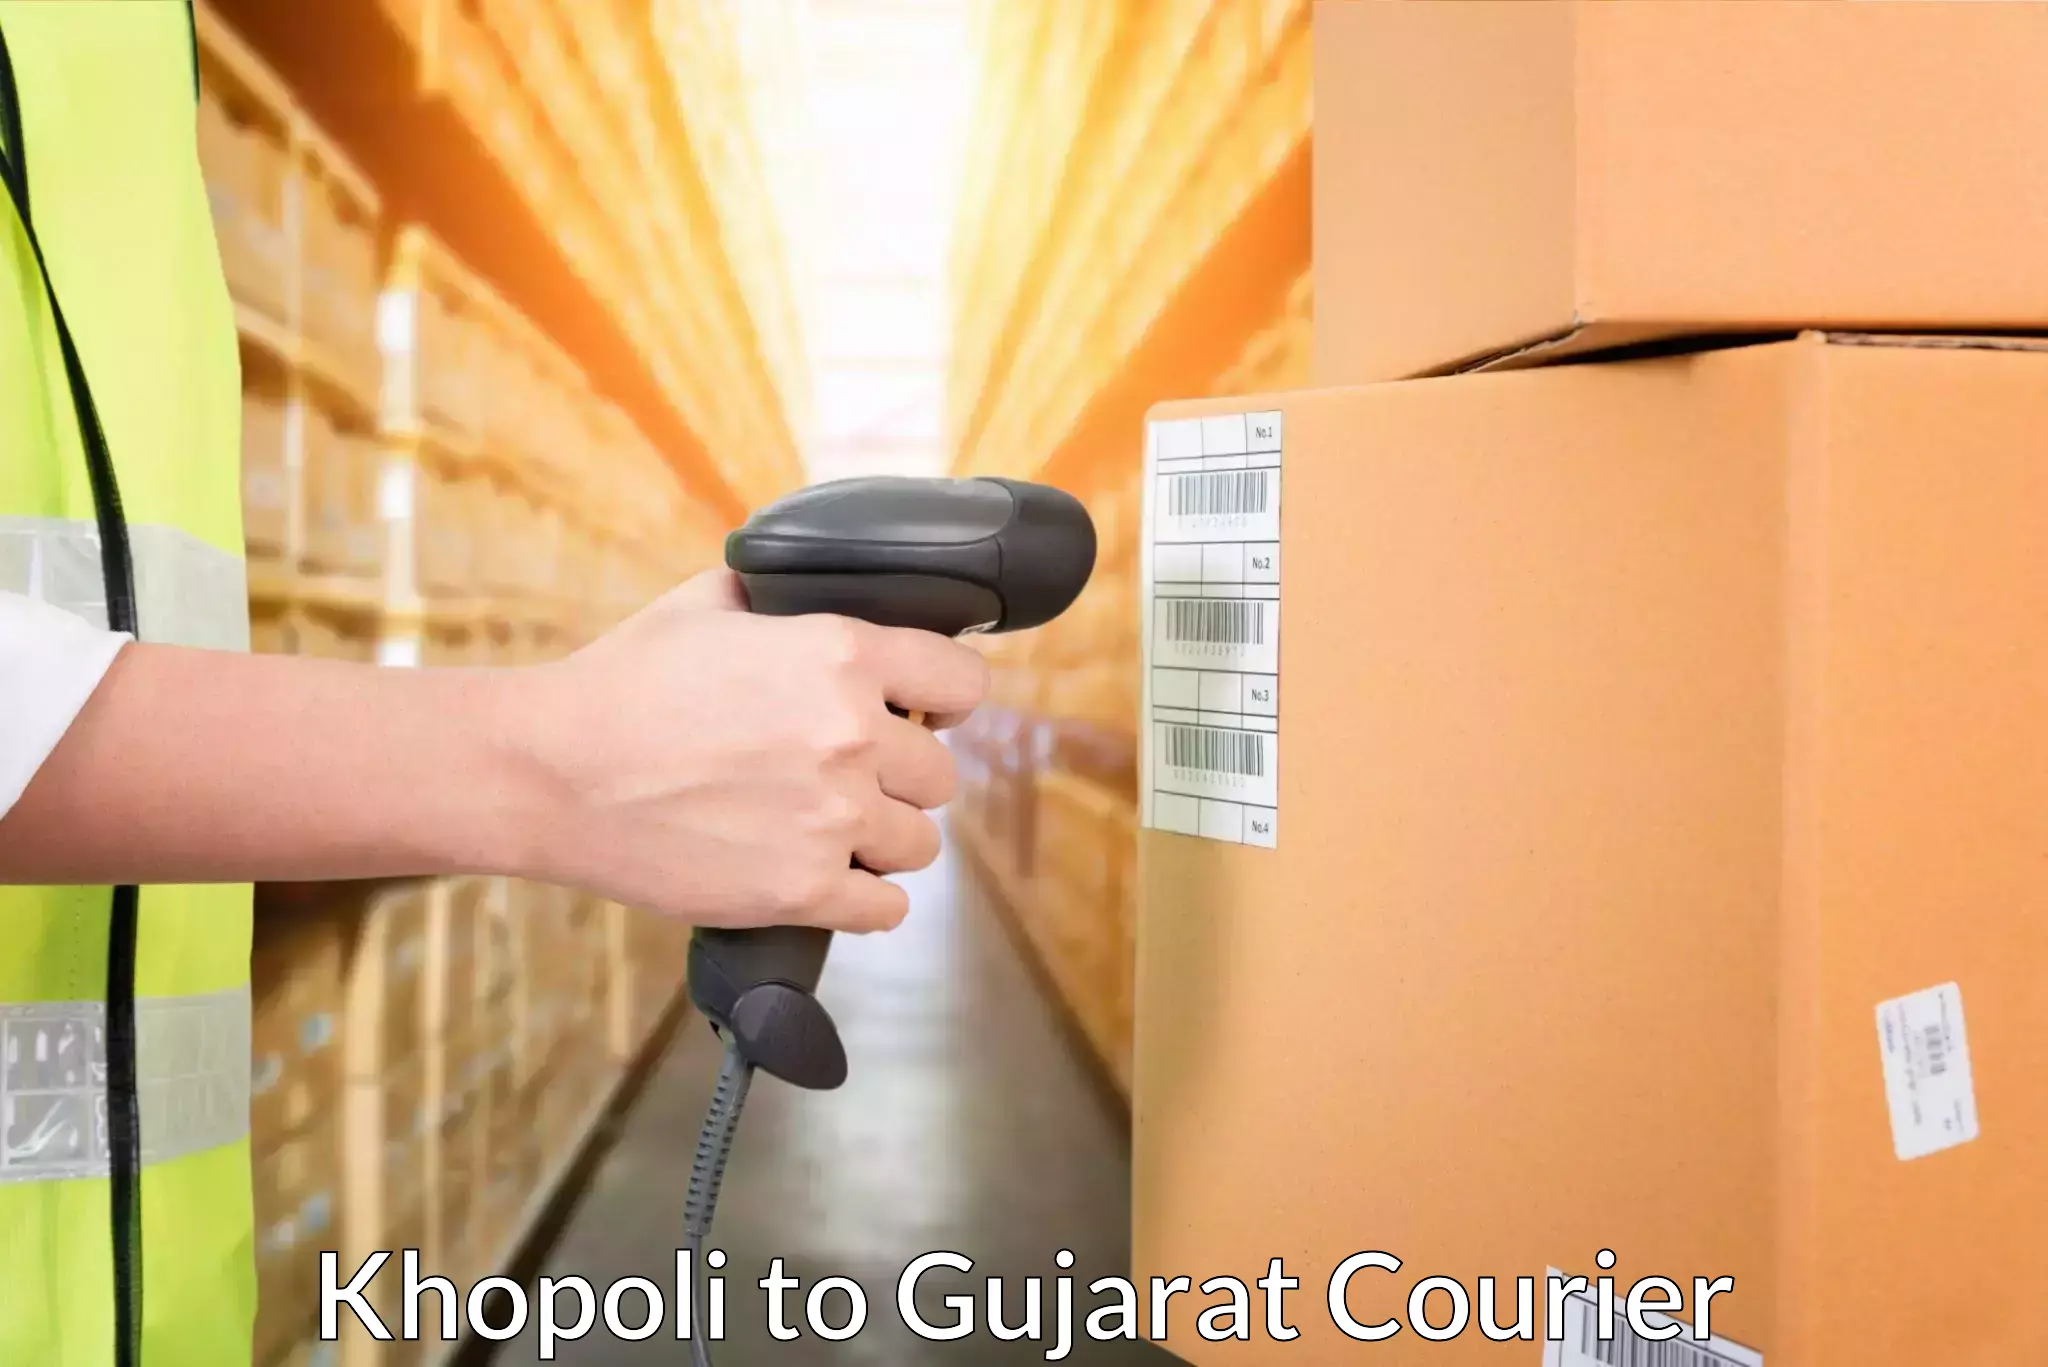 Express delivery capabilities Khopoli to Halol